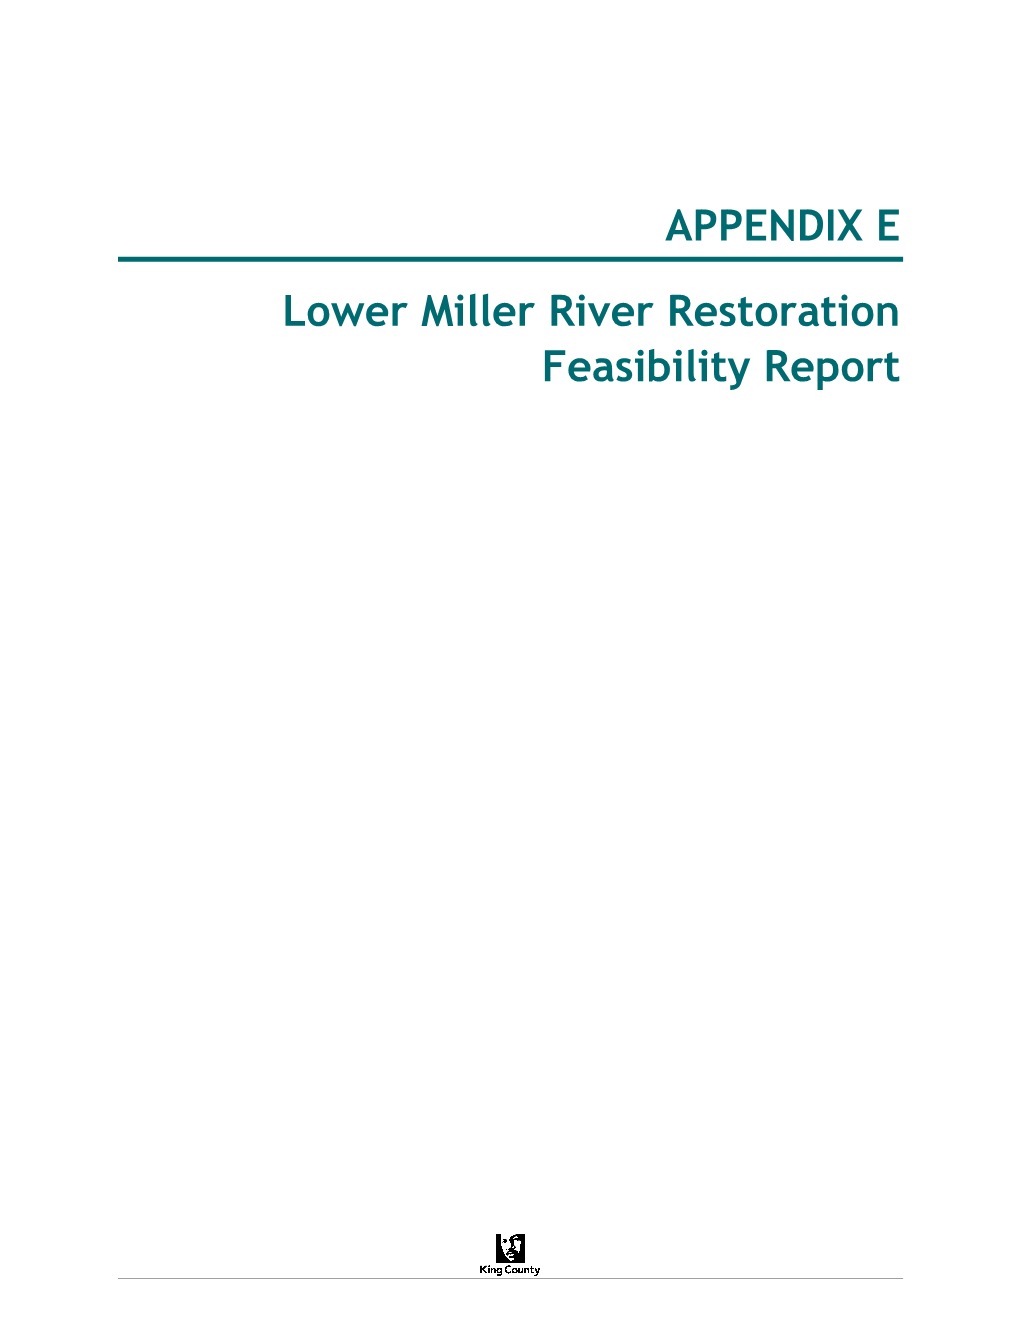 APPENDIX E Lower Miller River Restoration Feasibility Report